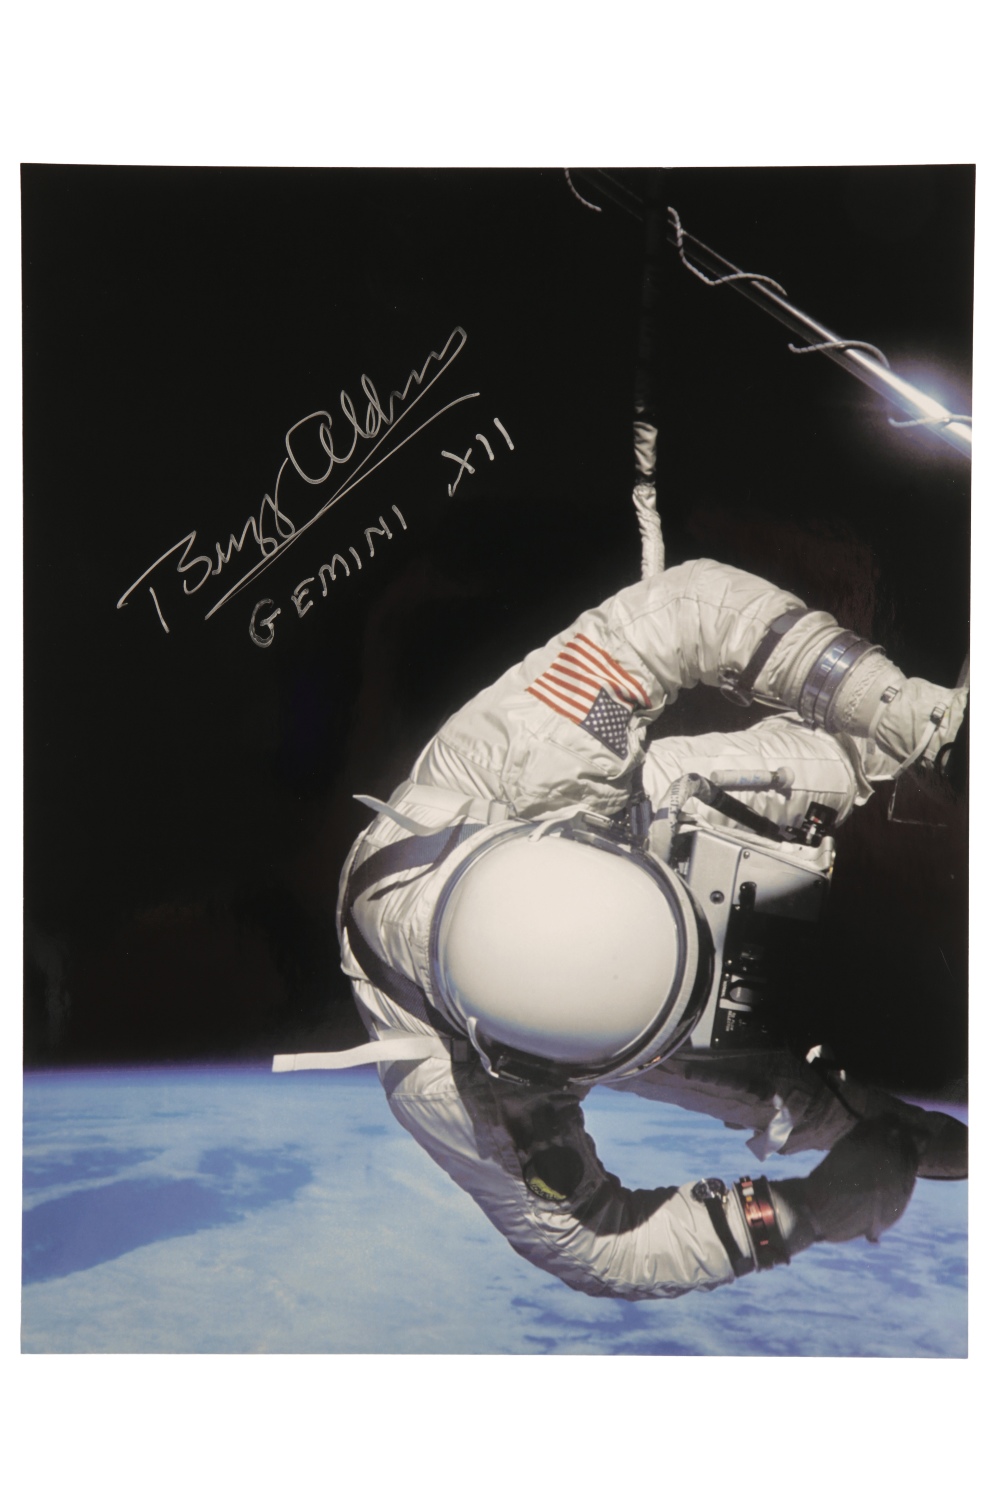 Buzz Aldrin, a Gemini spacewalk colour photograph signed and annotated 'Buzz Aldrin GEMINI XII'